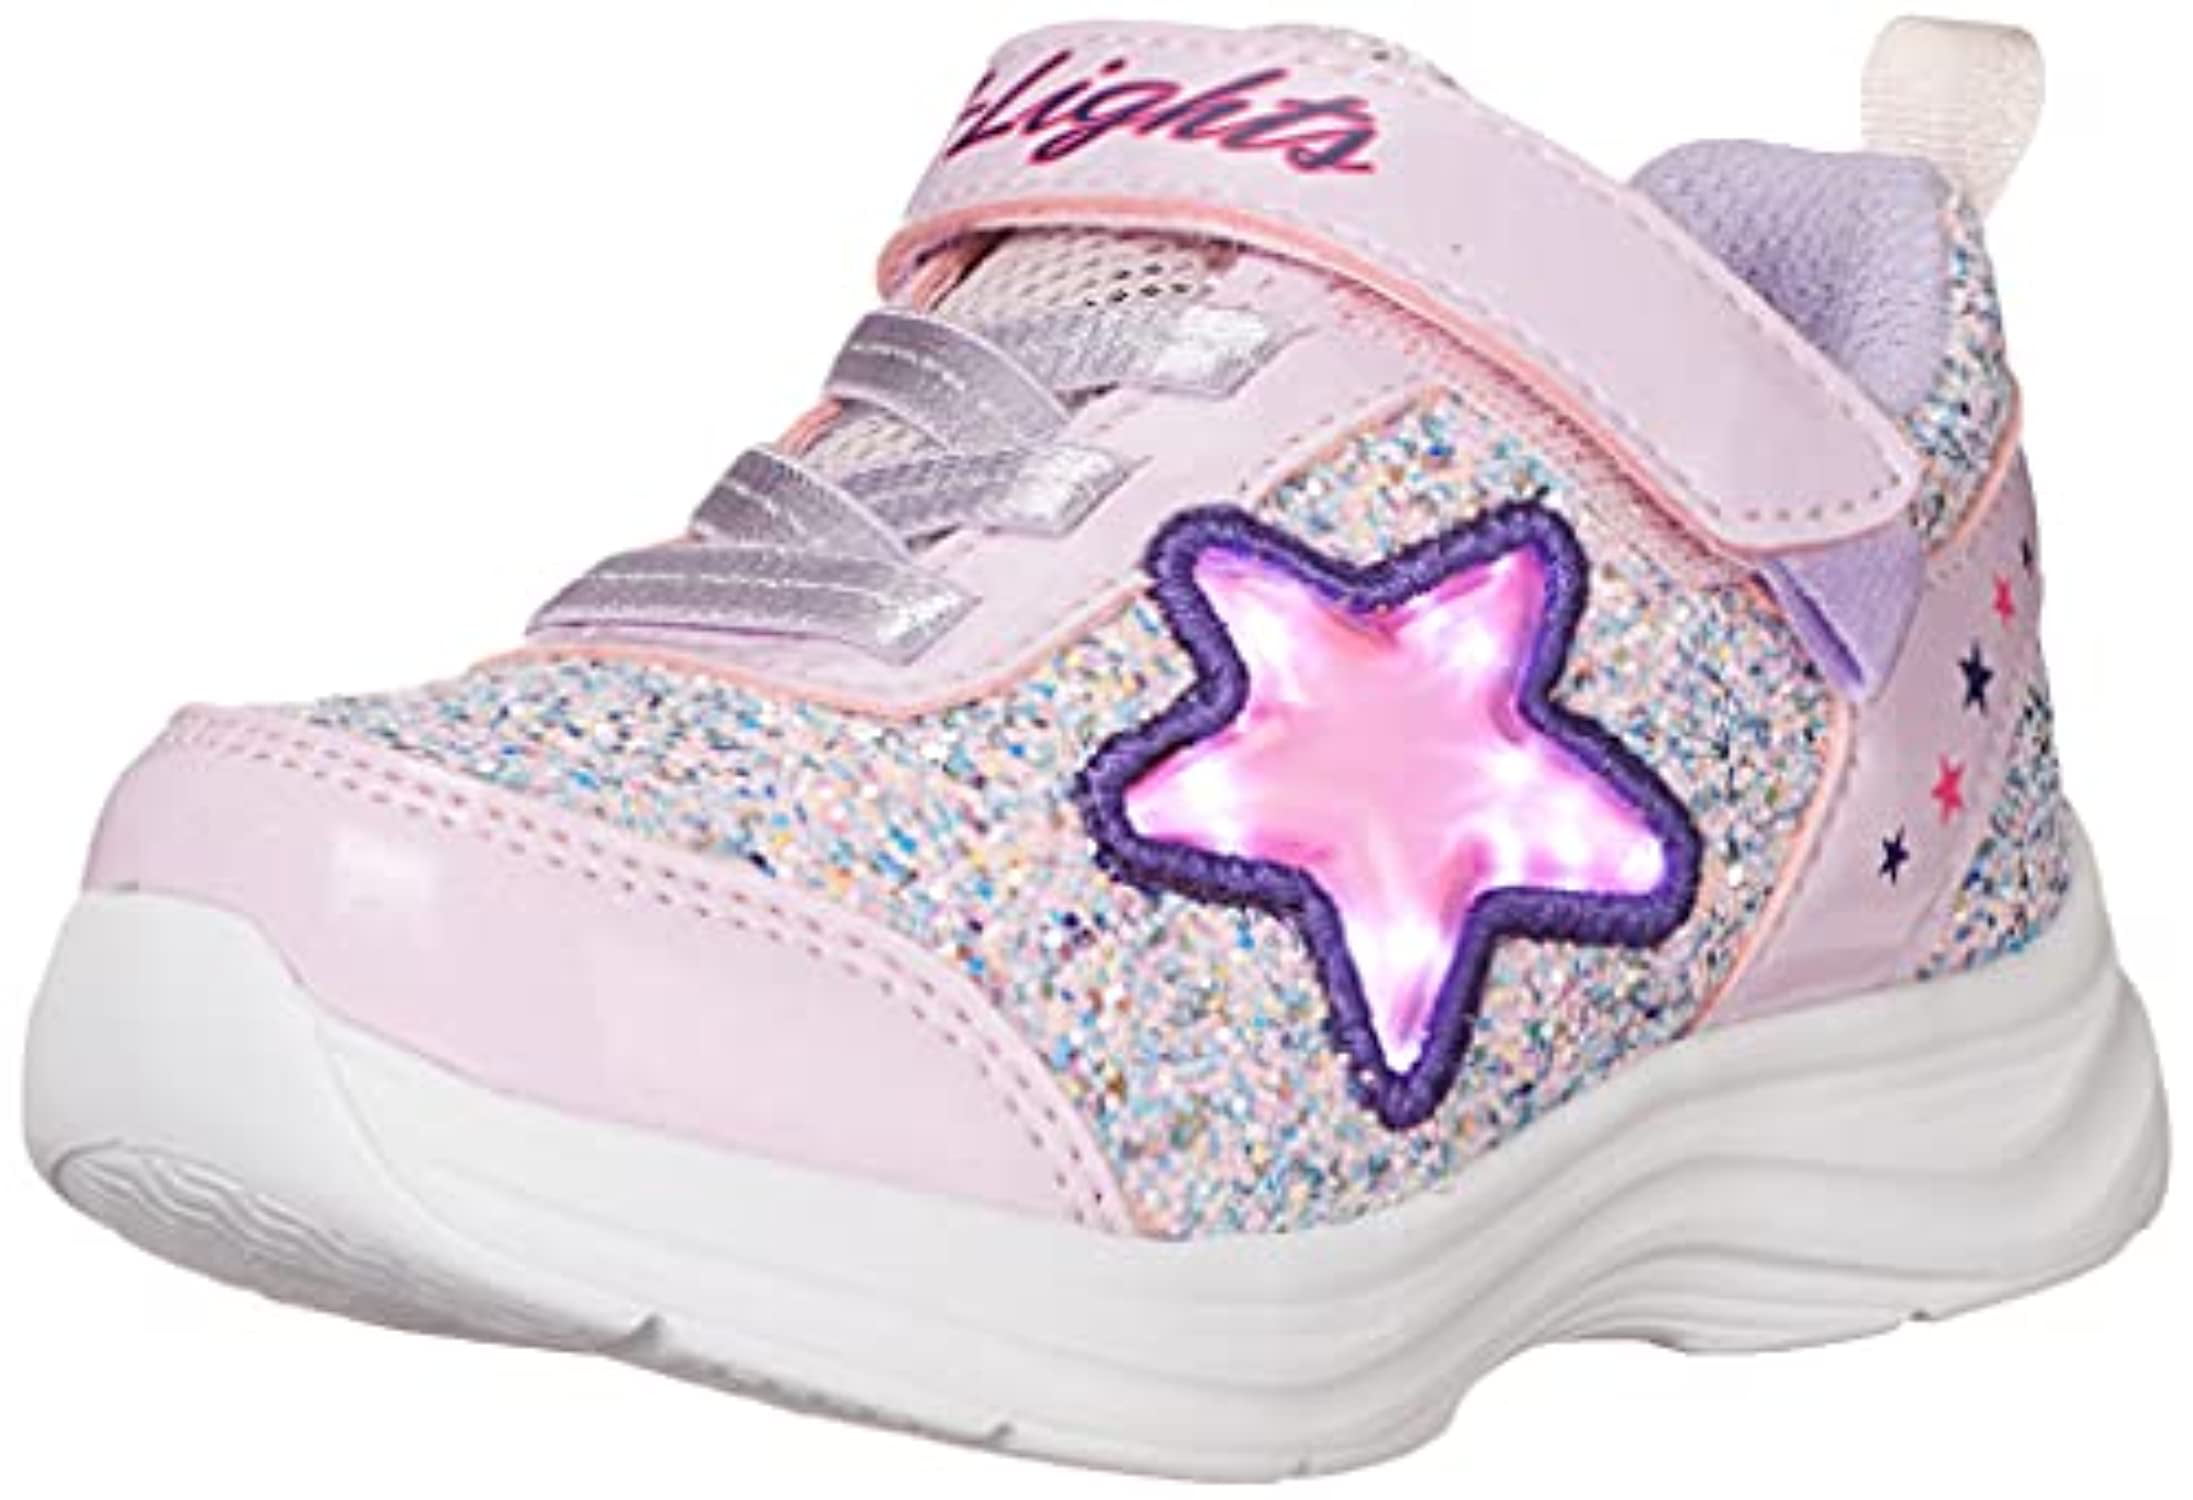 Skechers Glimmer Kicks Sneaker Girls) - Walmart.com